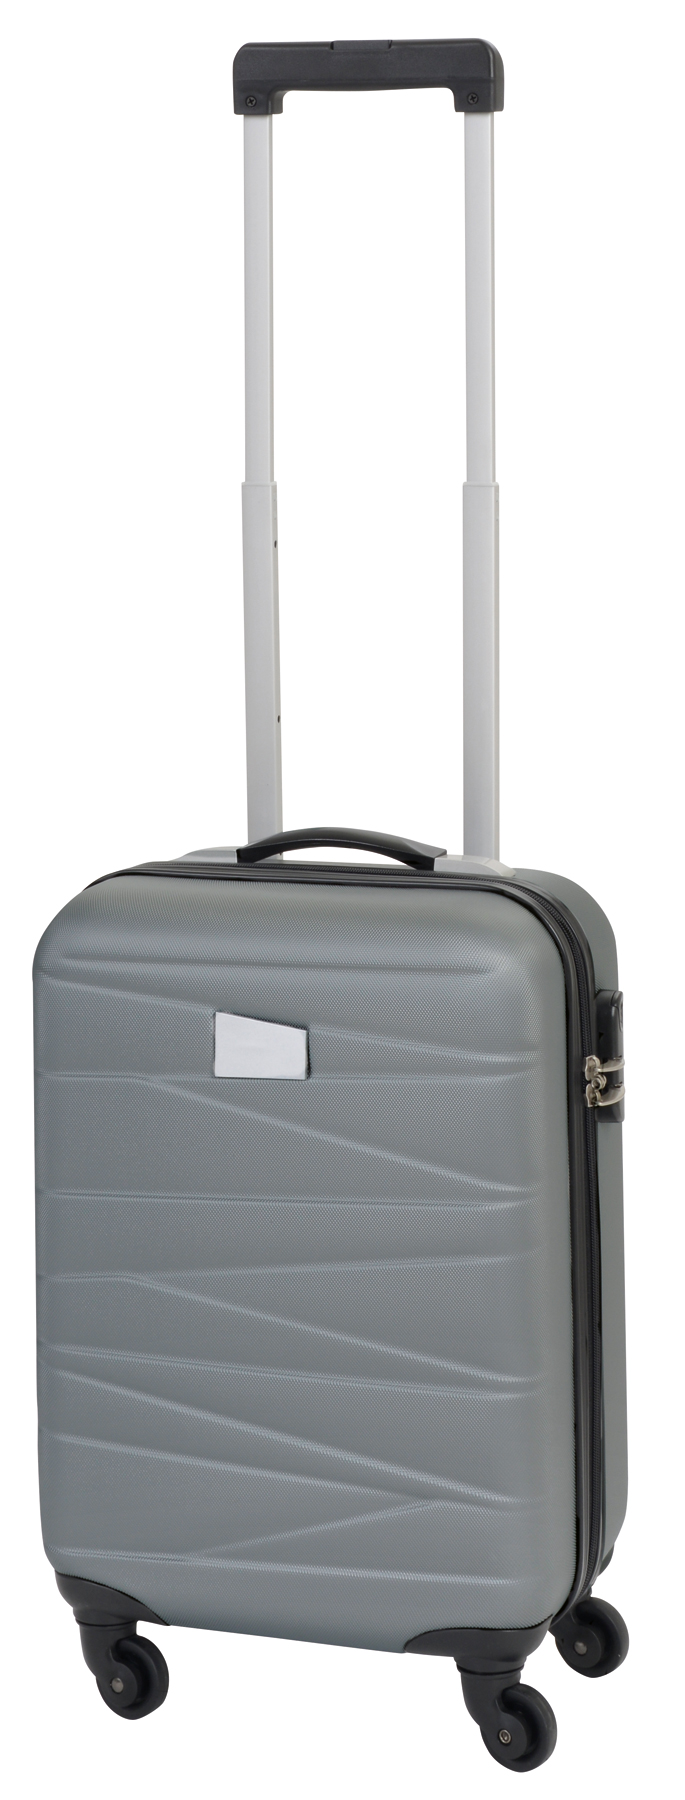 Trolley cabin suitcase PADUA - silver